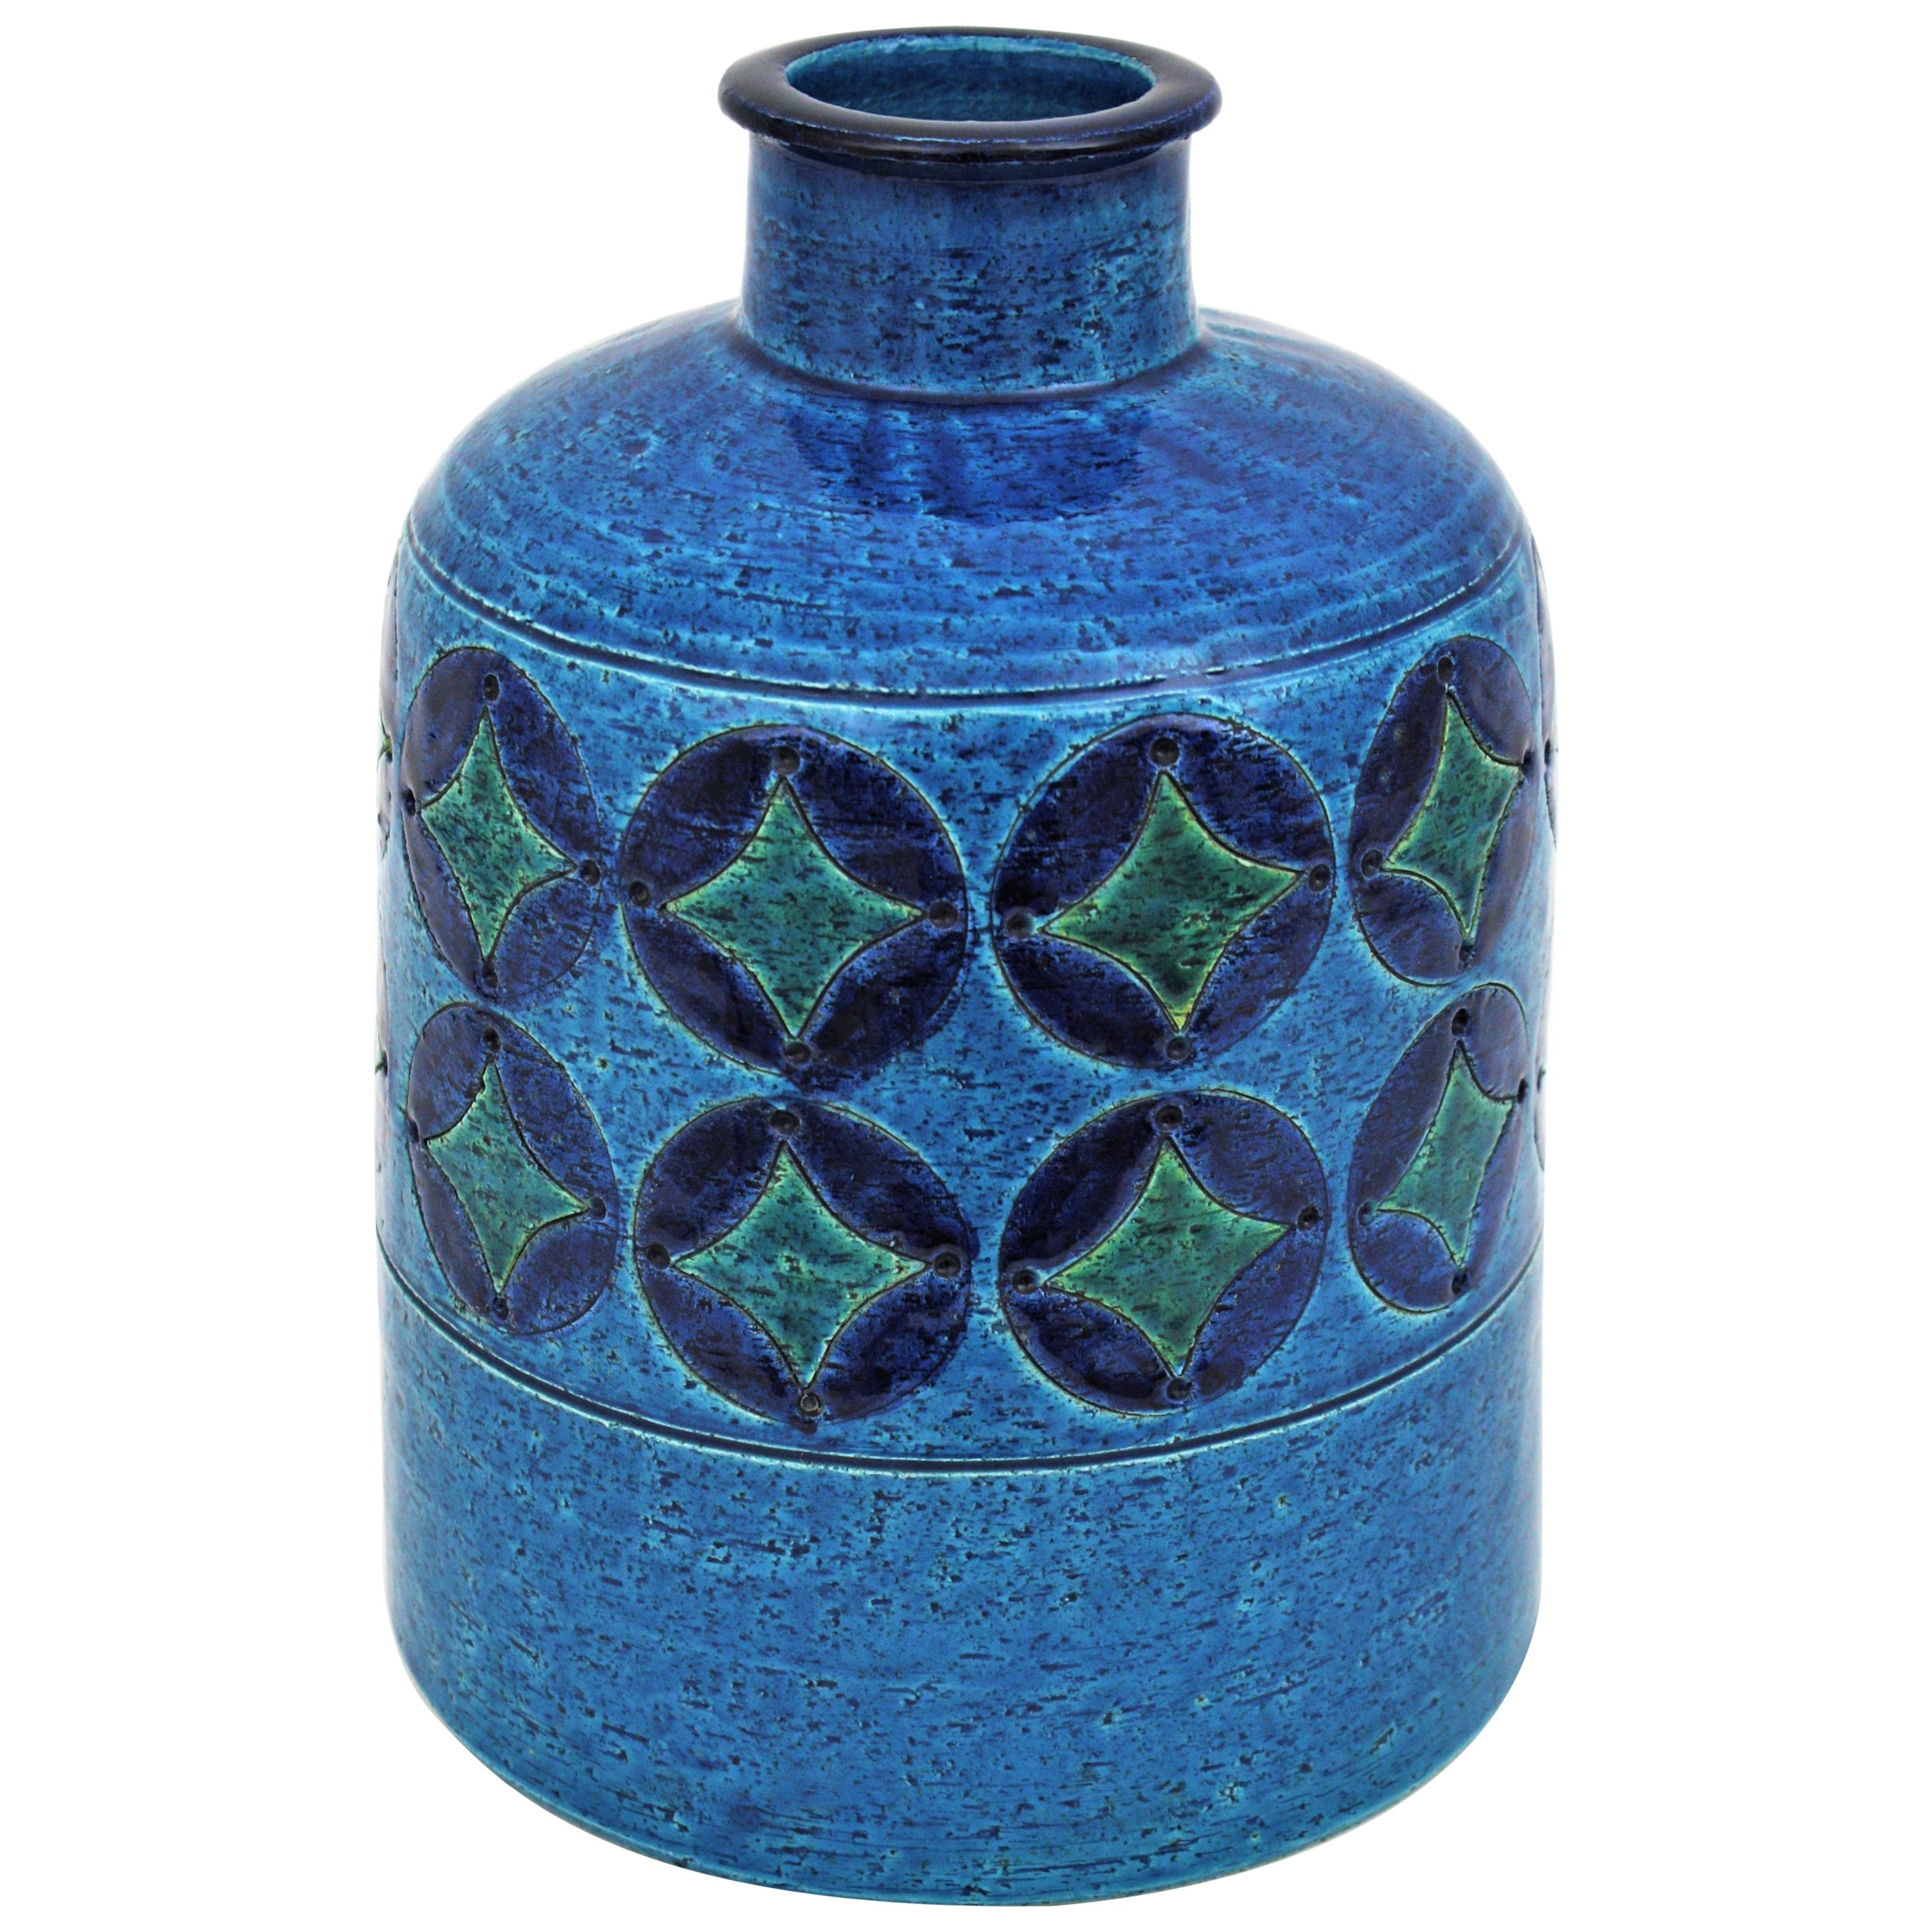 Bitossi Aldo Londi Blue Ceramic Large Bottle Vase with Circles & Rhombus Pattern